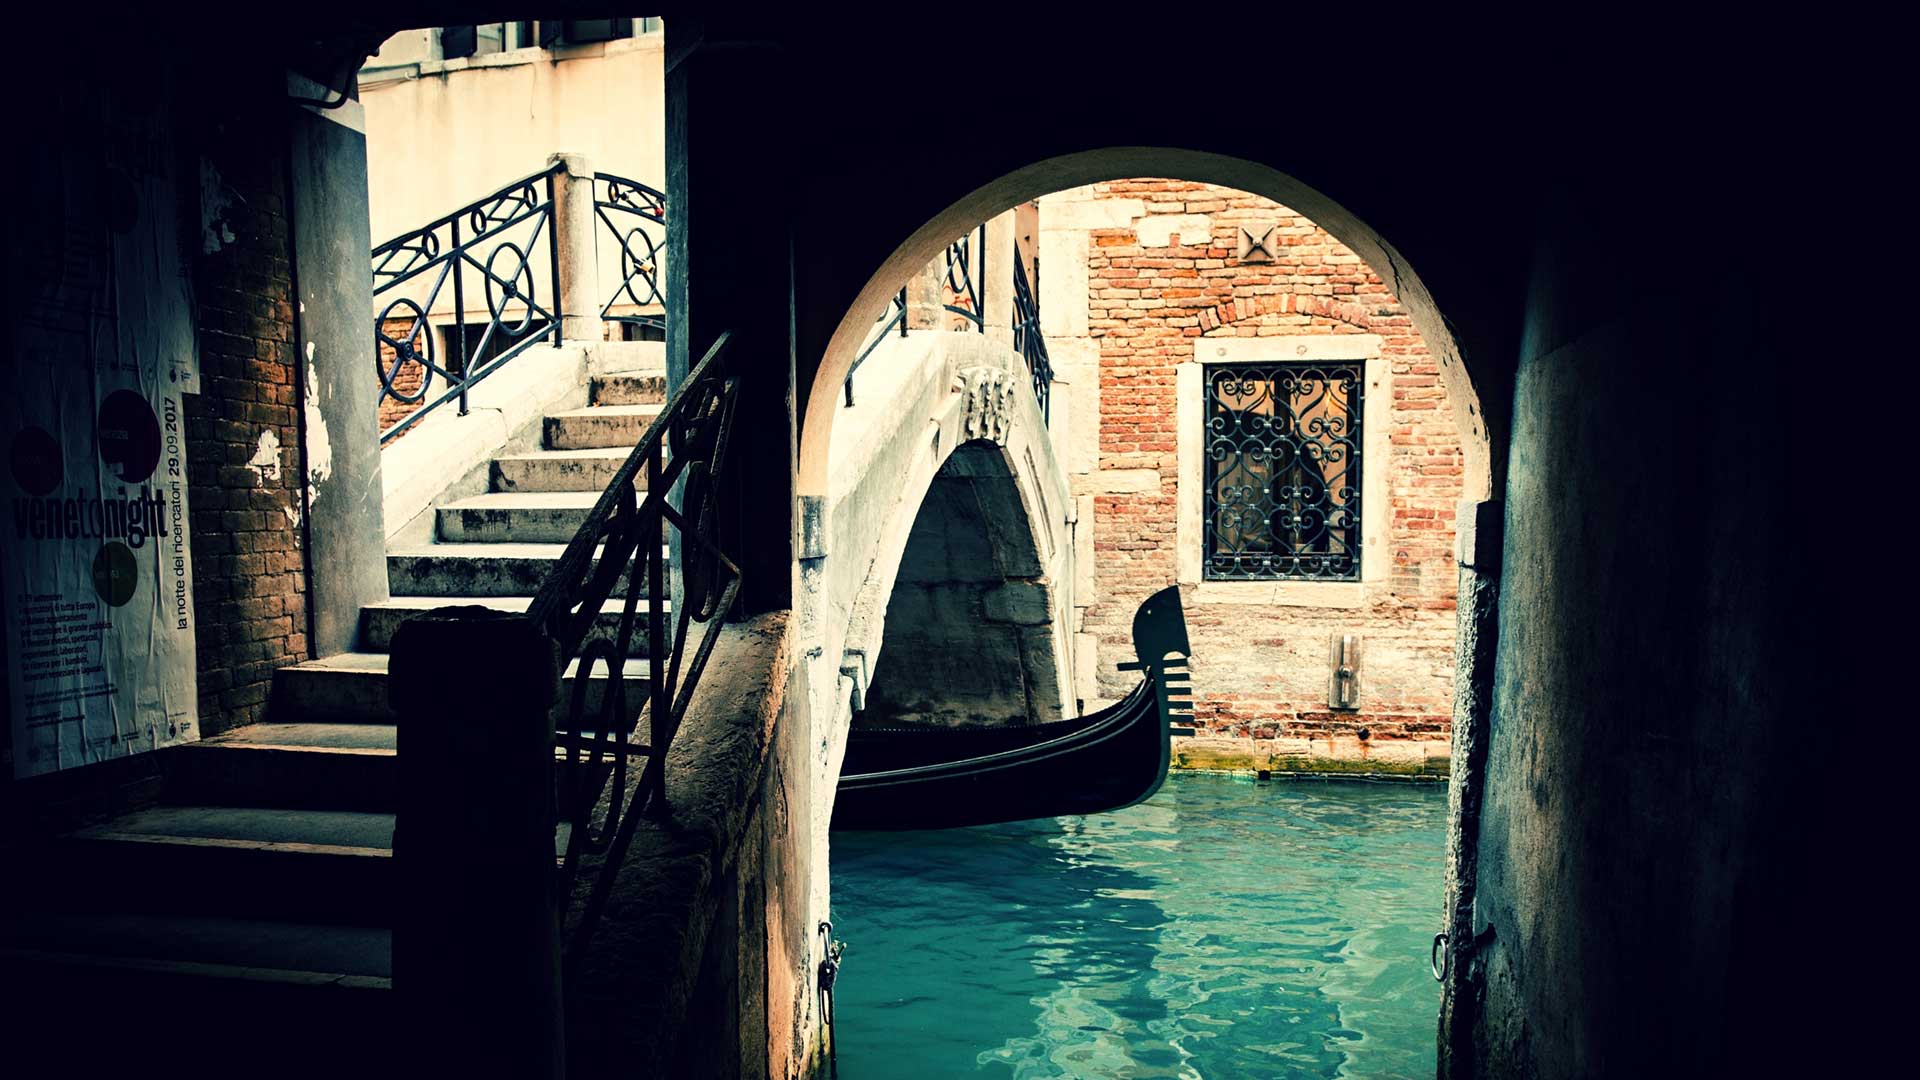 Hidden gondola under a bridge in Venice